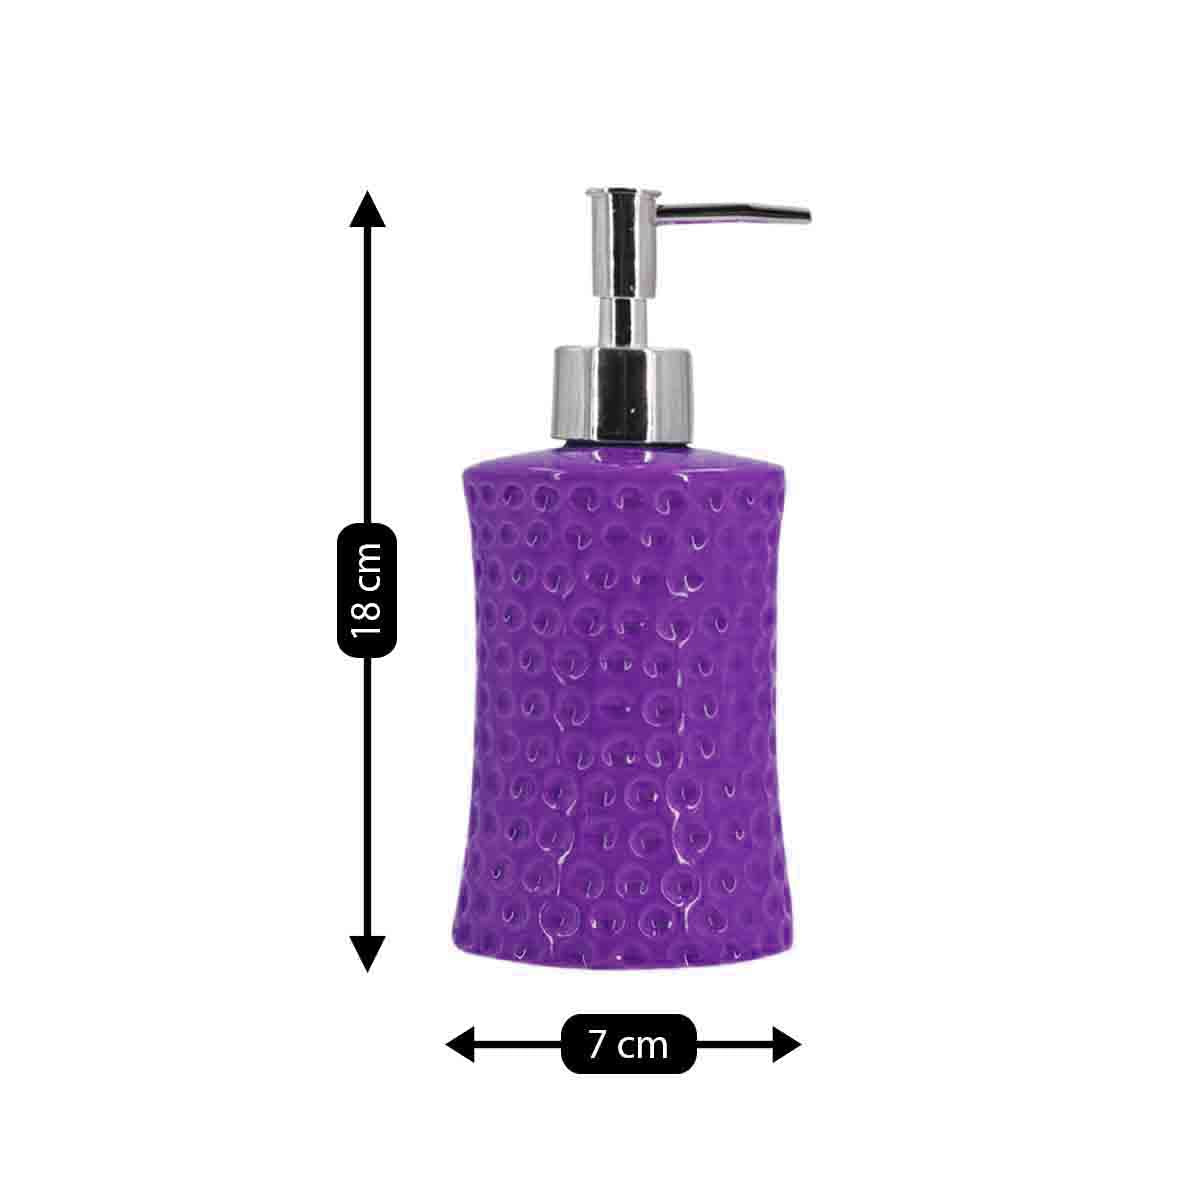 Ceramic Soap Dispenser Pump for Bathroom for Bath Gel, Lotion, Shampoo (8041)